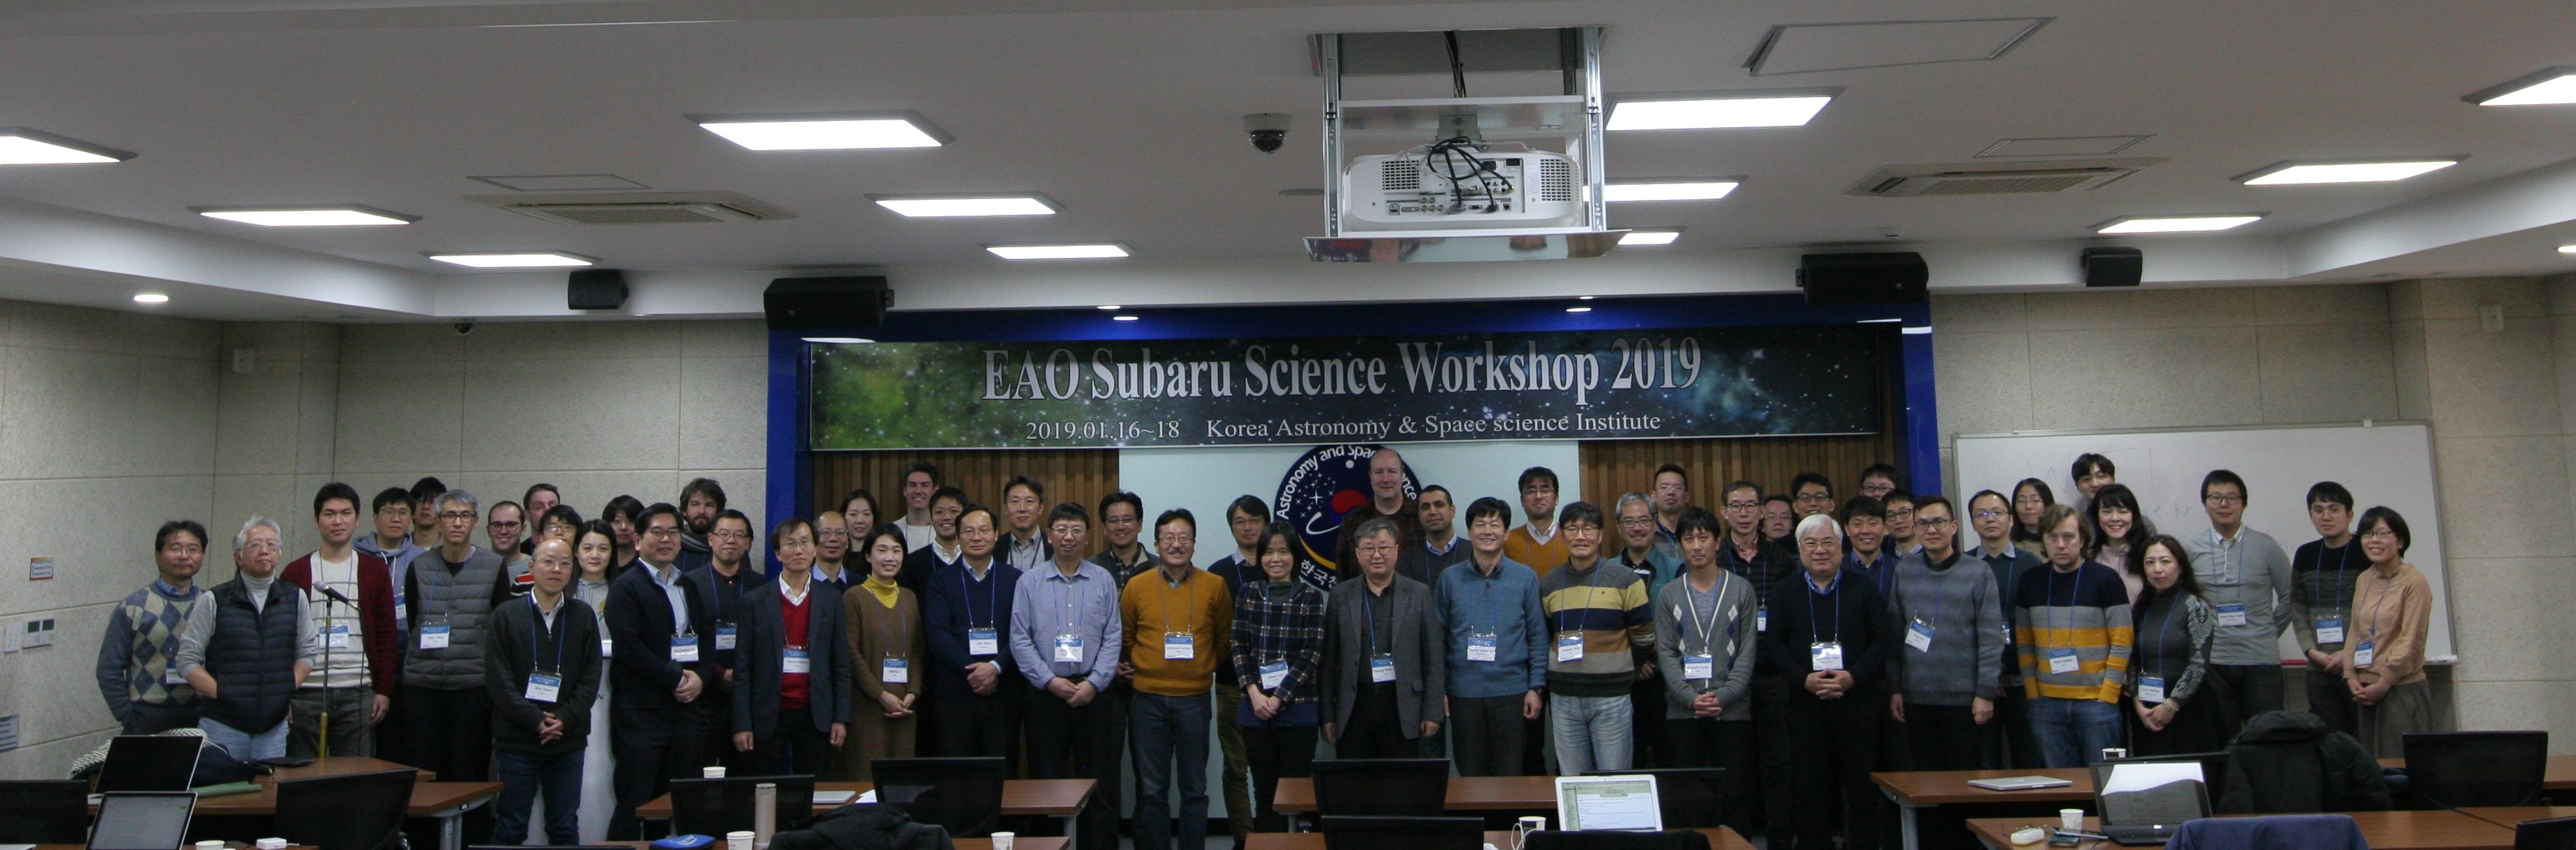 EAO-Subaru Science Workshop 2019